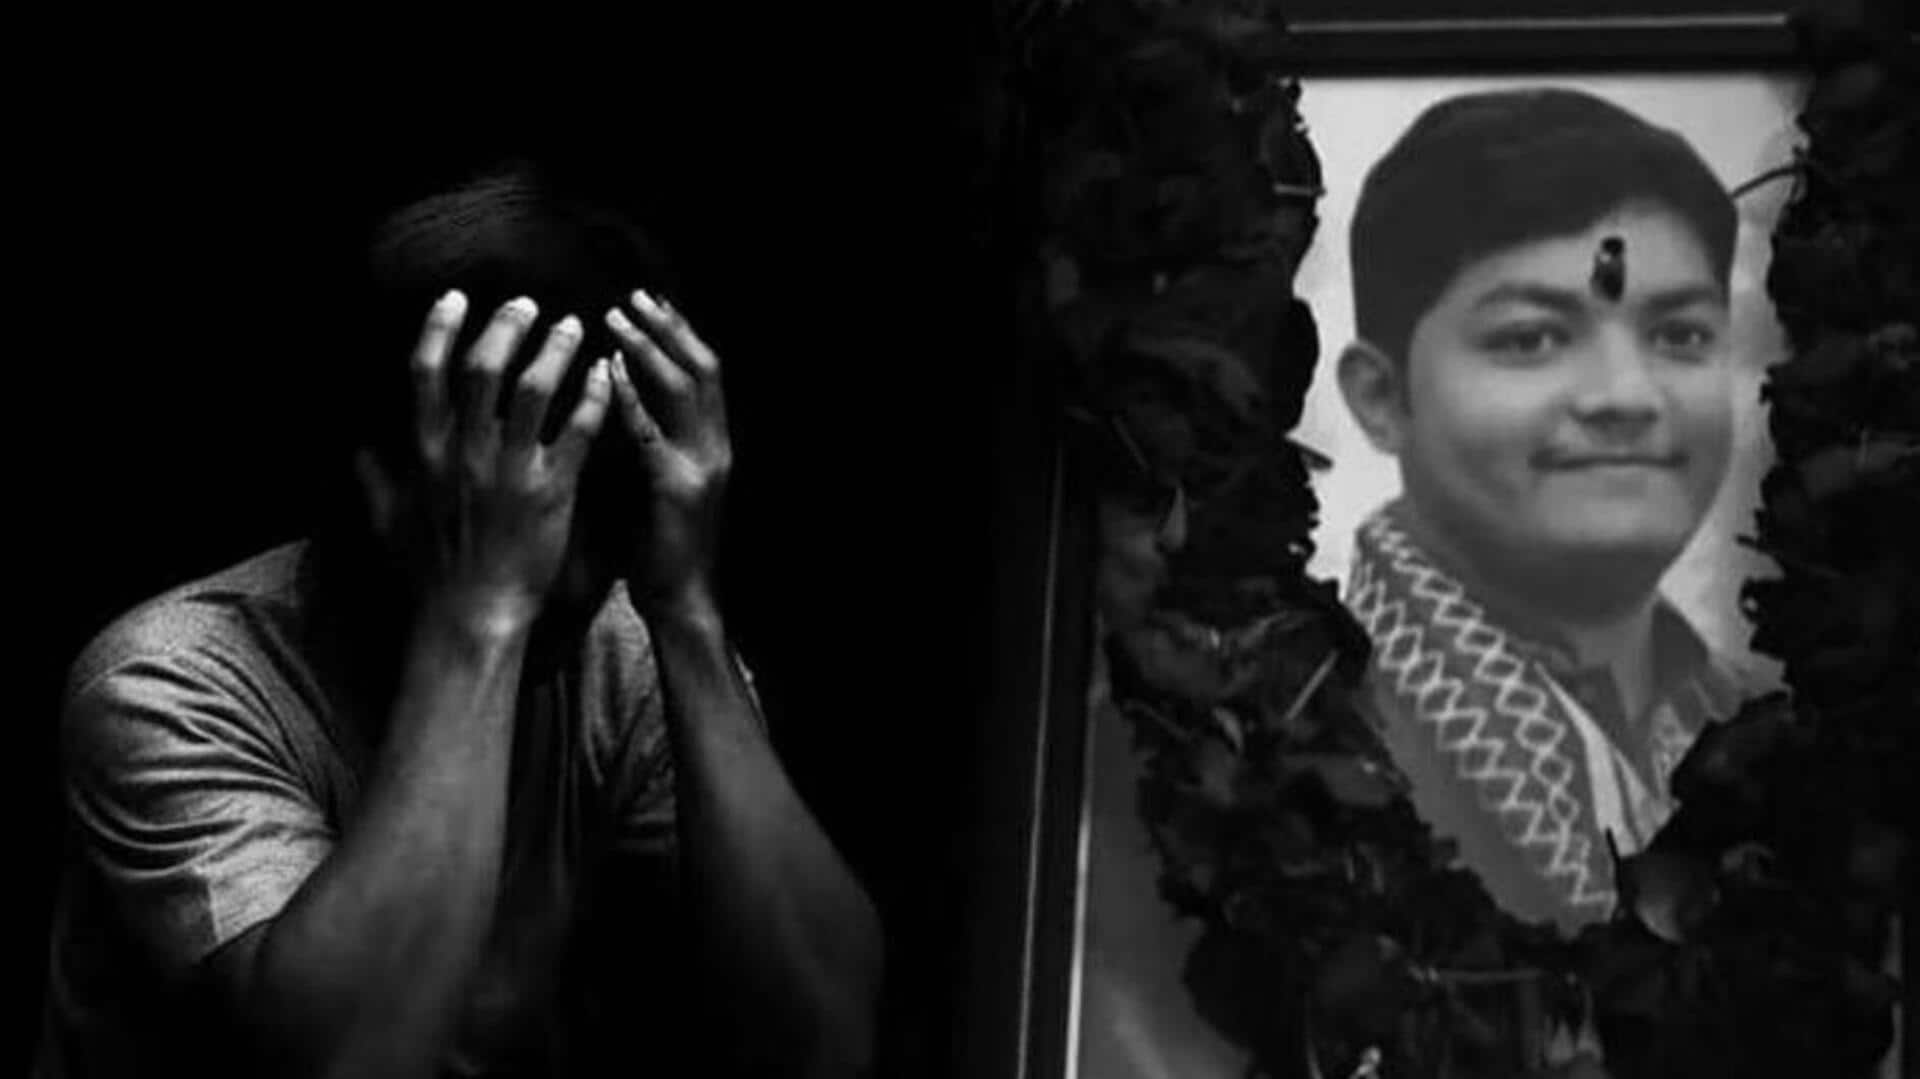 IIT बॉम्बे आत्महत्या मामला: छात्र से होता था जातिगत भेदभाव, बदल गया था दोस्तों का व्यवहार